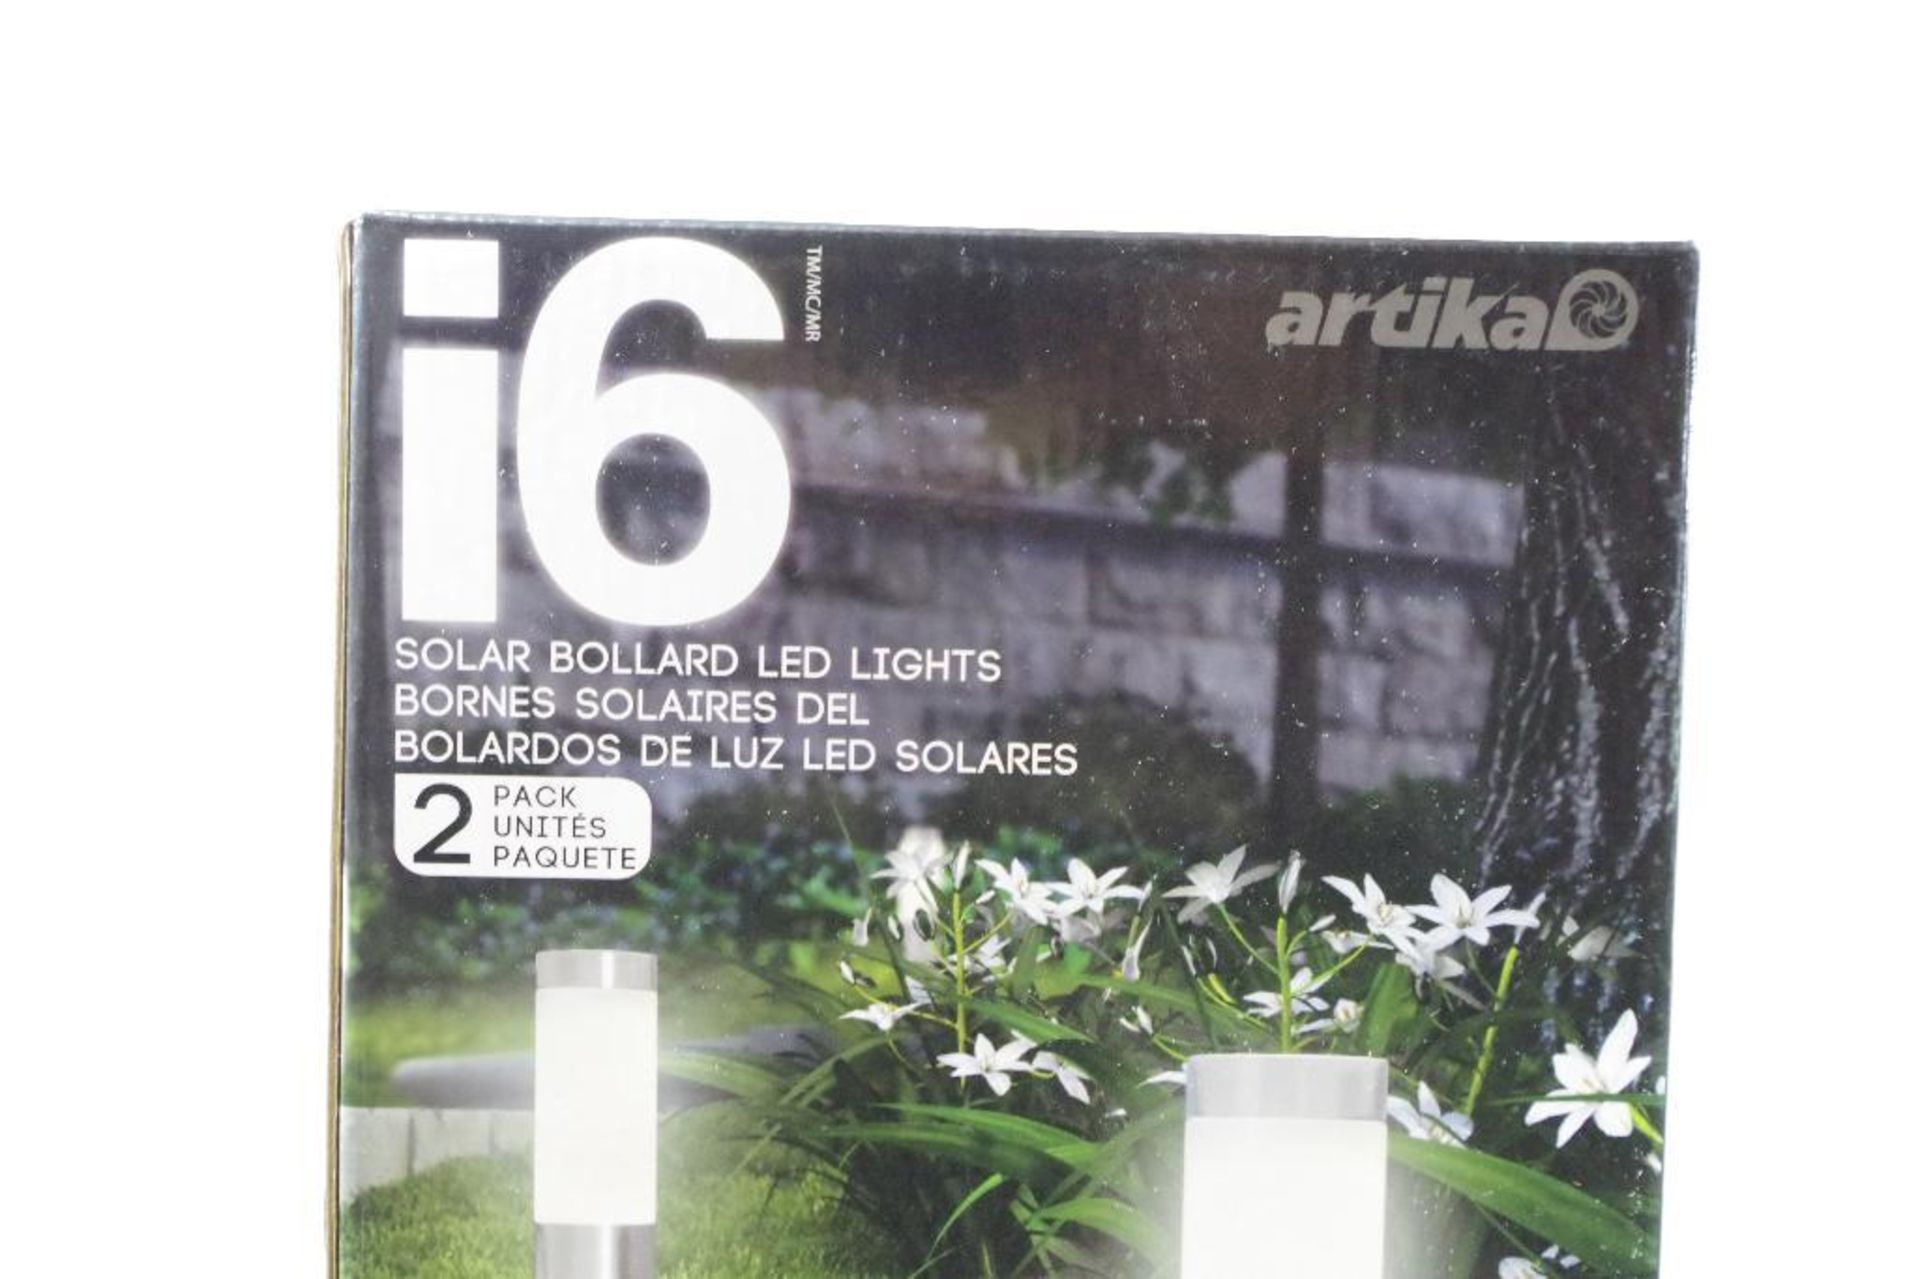 NEW 2-Pack i6 Solar Bollard LED Lights - Image 2 of 3